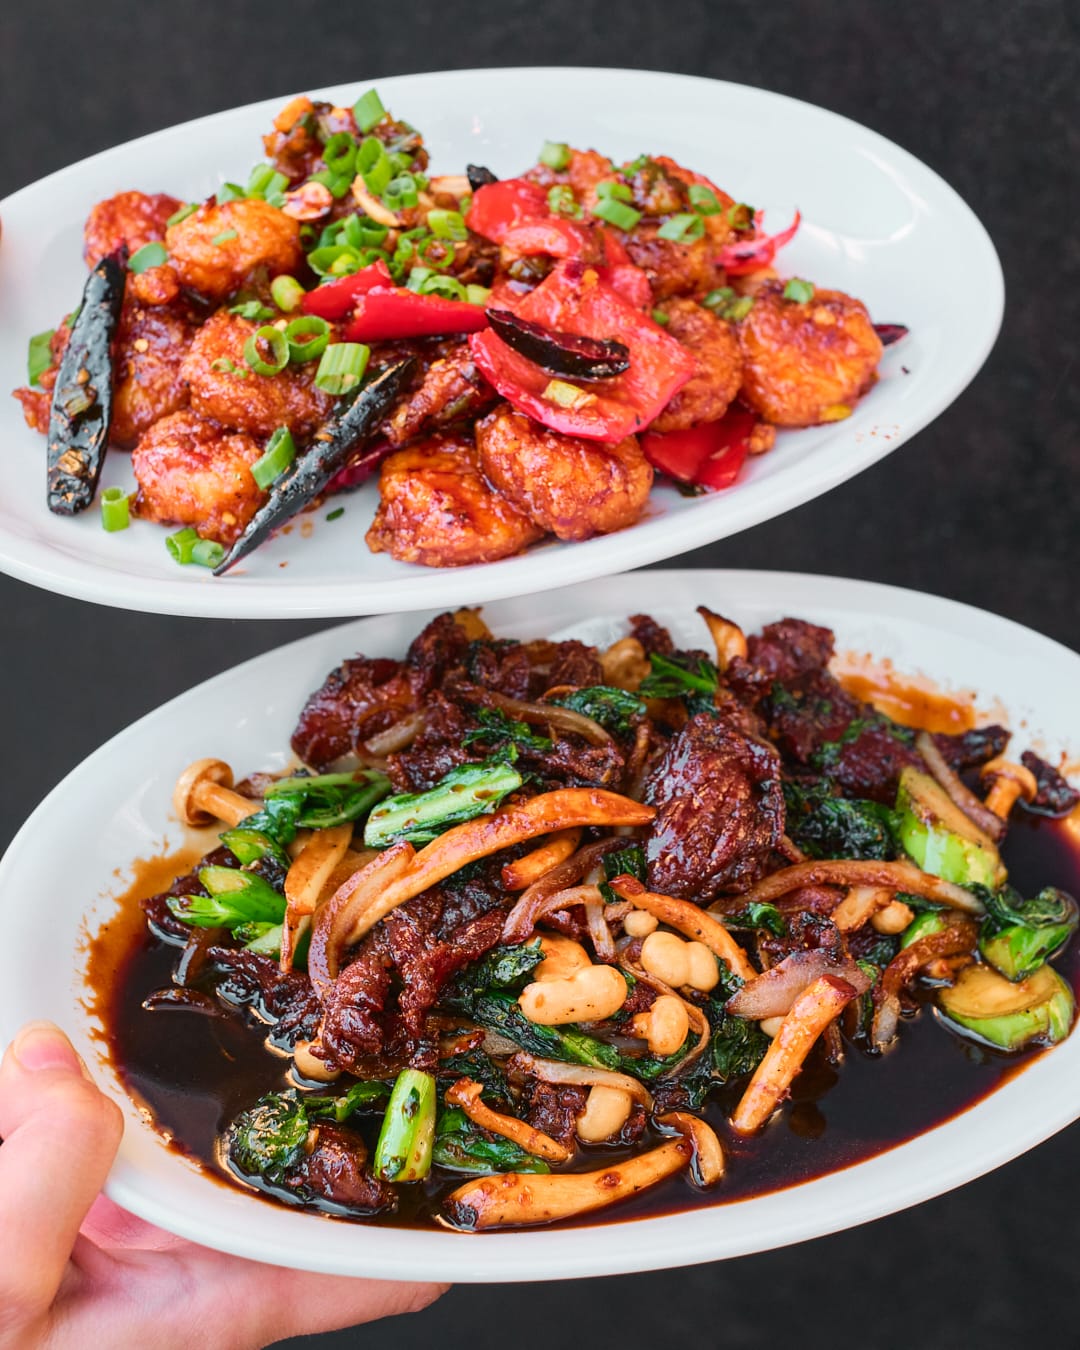 Mongolian beef and kung pao shrimp plates.